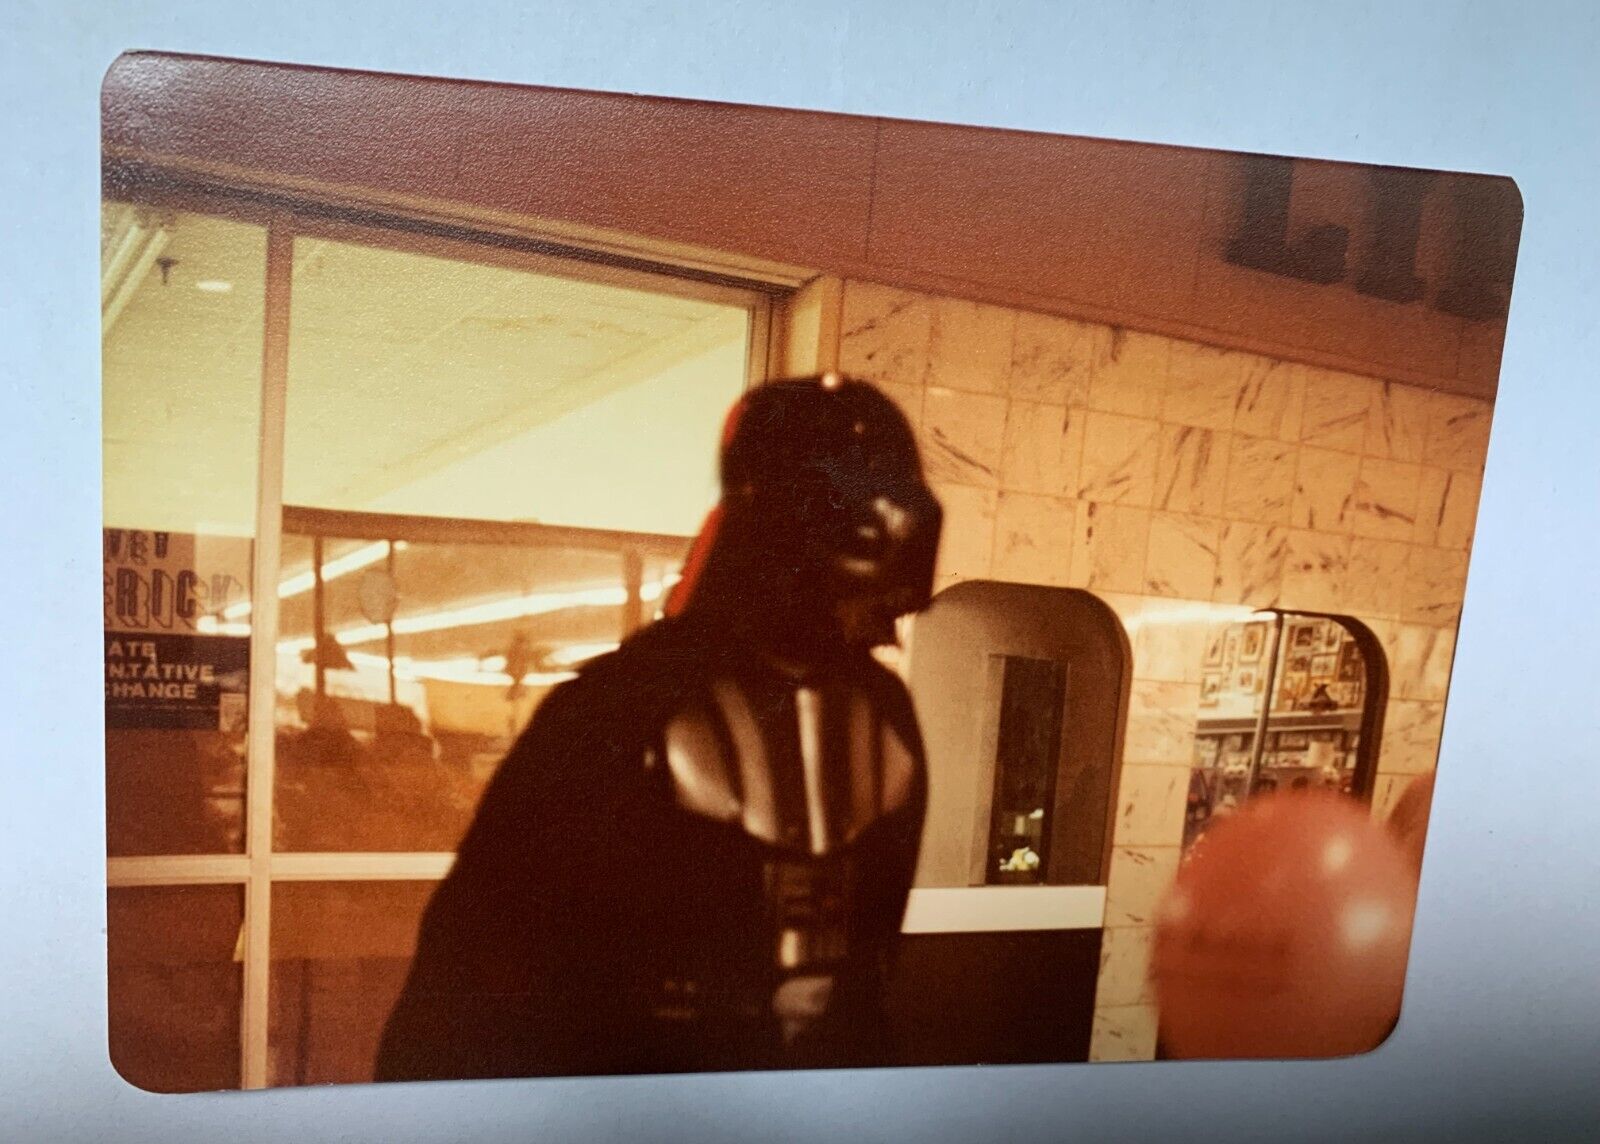 Star Wars Darth Vader David Prowse Photo Snapshot - 1ofAkind Vintage Collectible